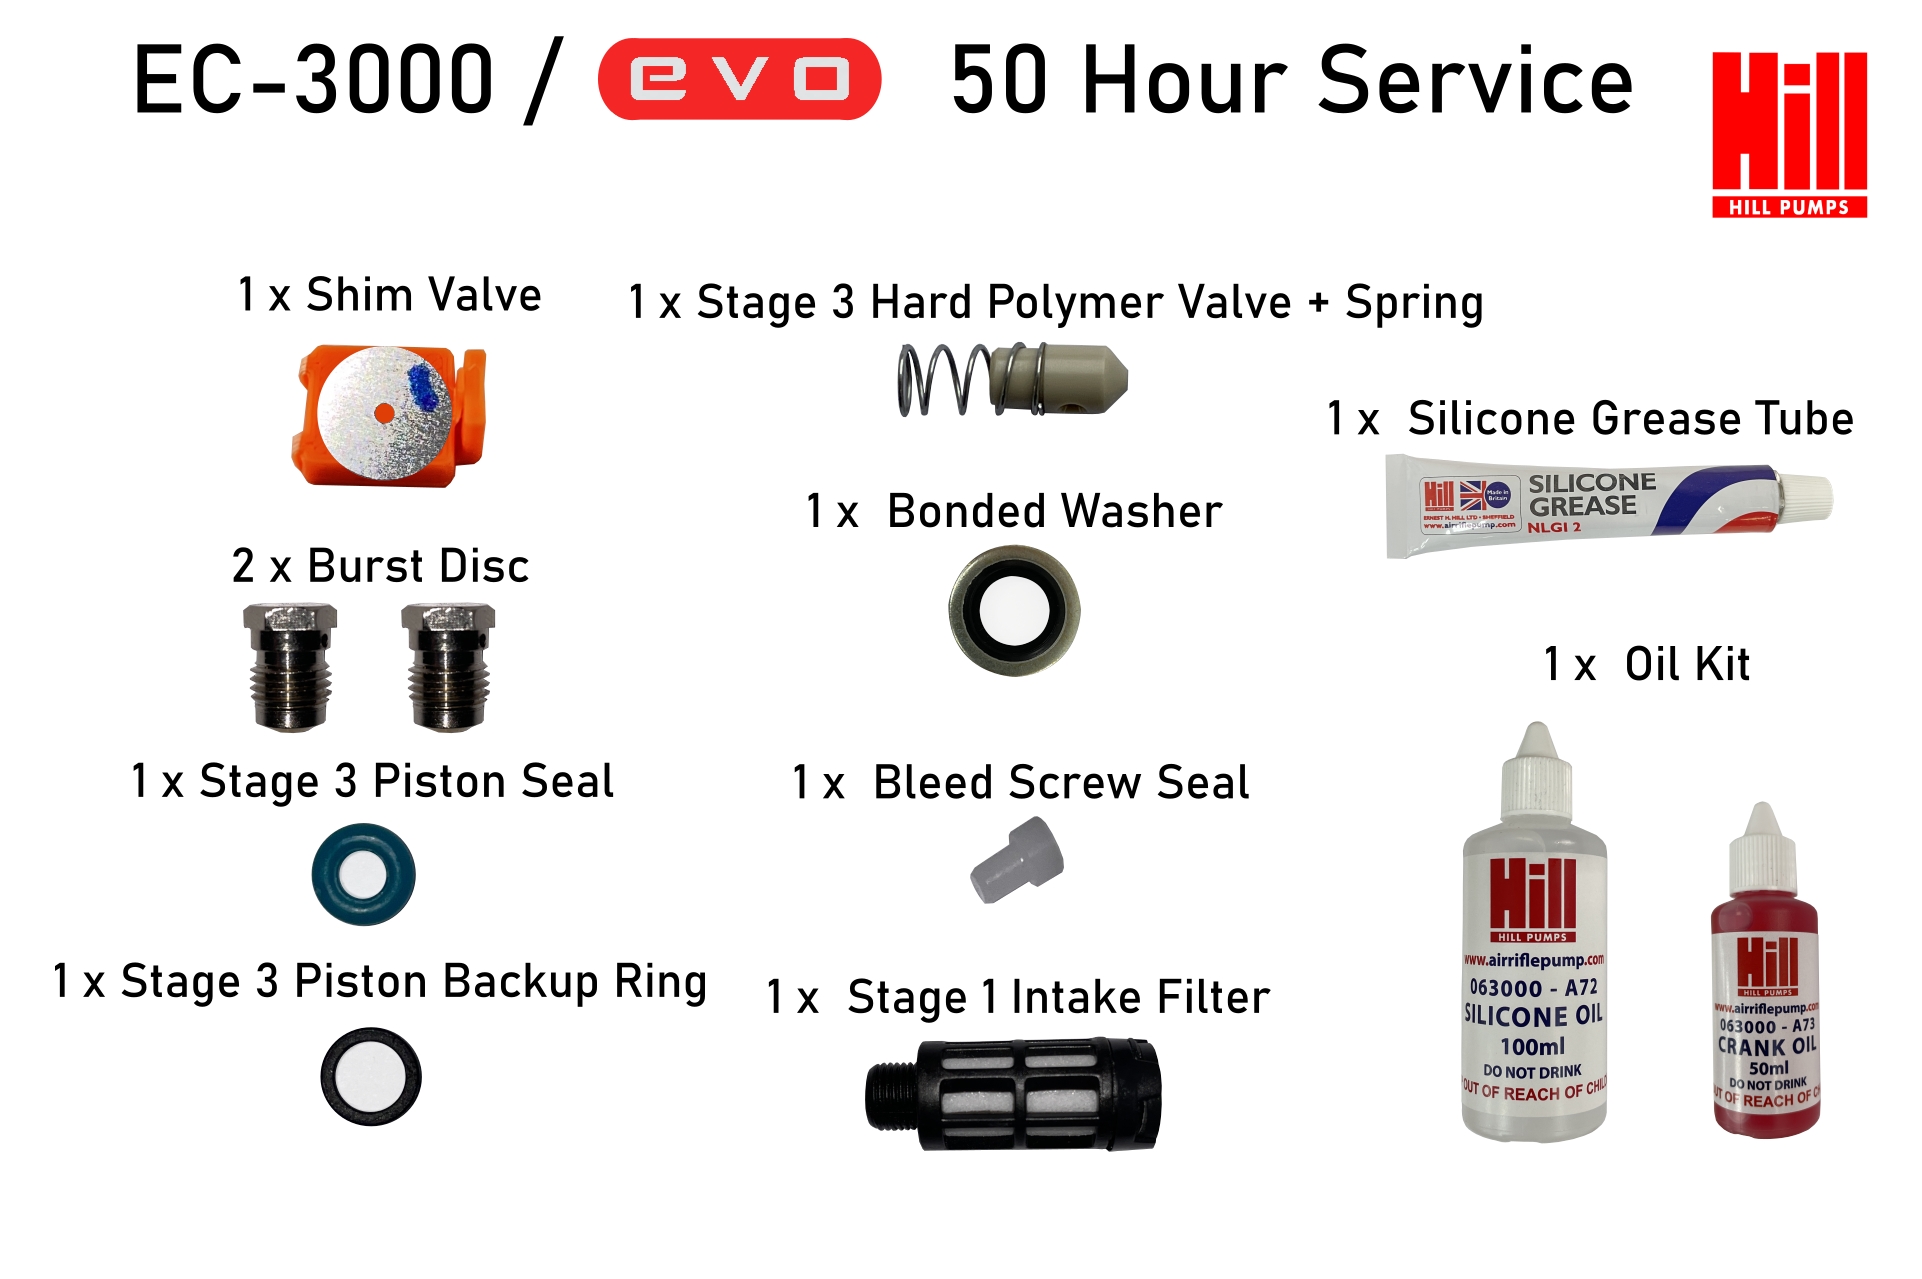 EC-3000 /  EC-3000 Evo / Dry-Pac Pro Service Kits and Items